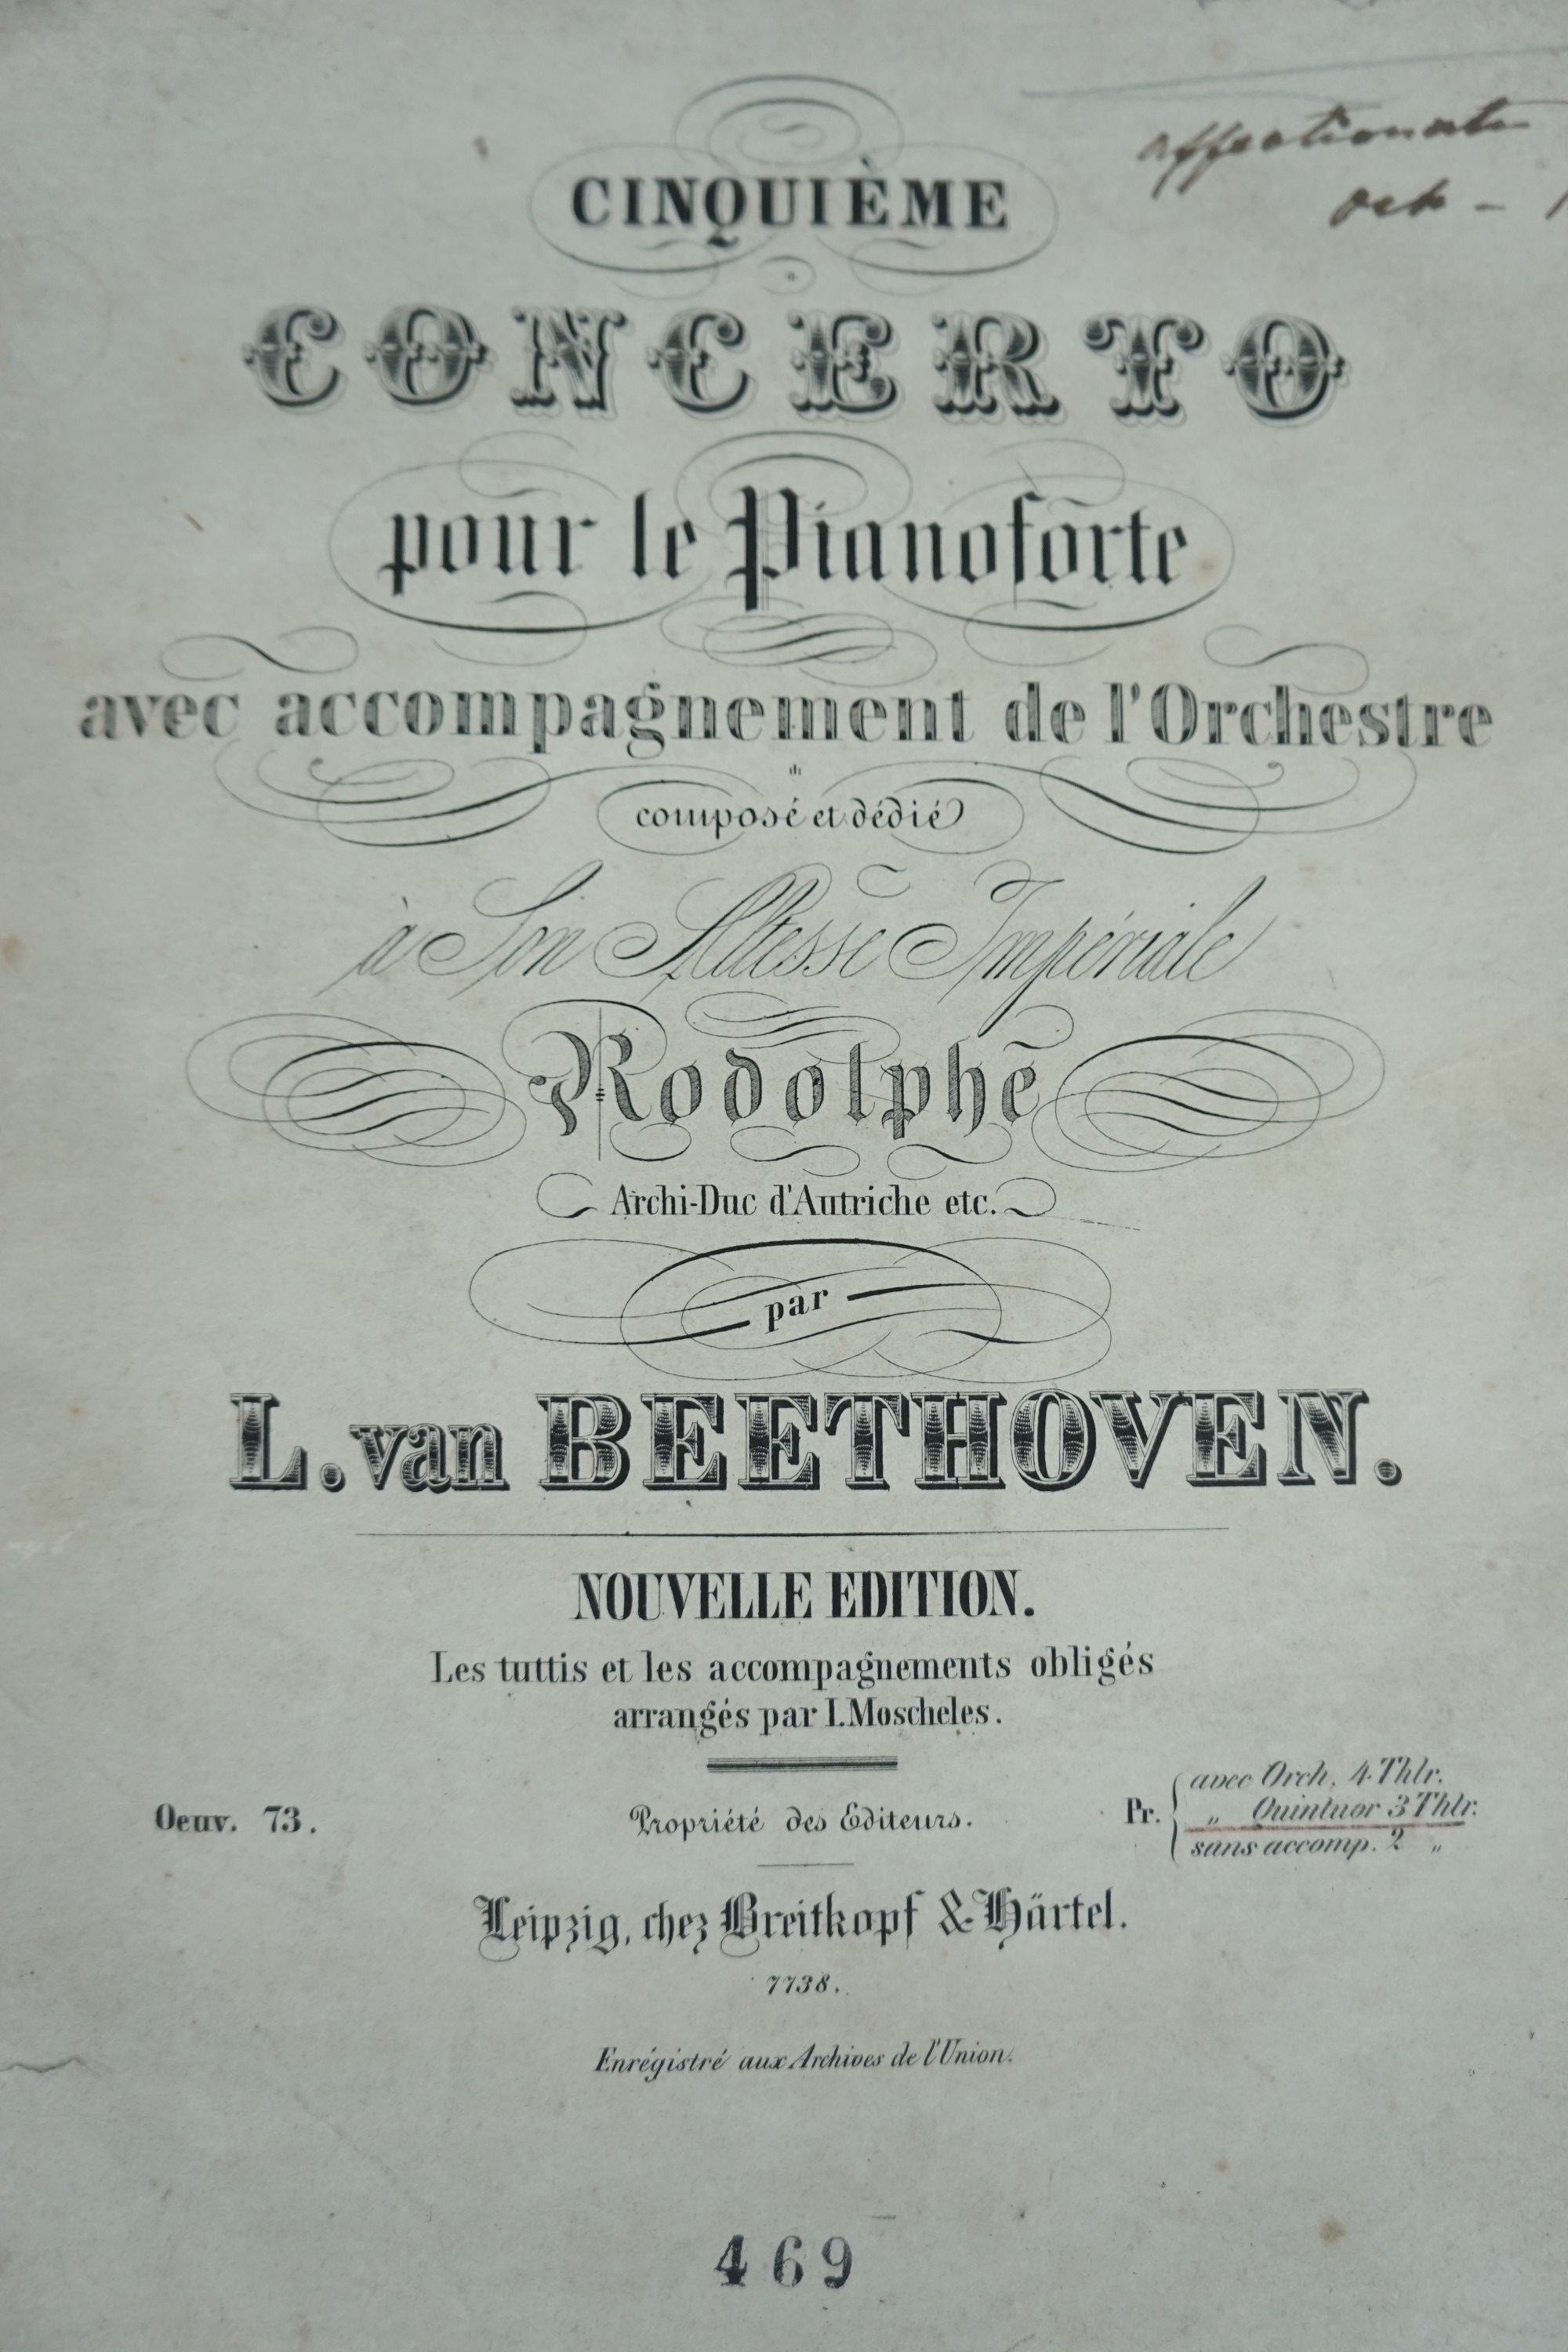 [ Sheet music ] Beethoven, No 5 piano concerto, Breitkopf and Hartel, 7738, circa 1840 - Image 2 of 4